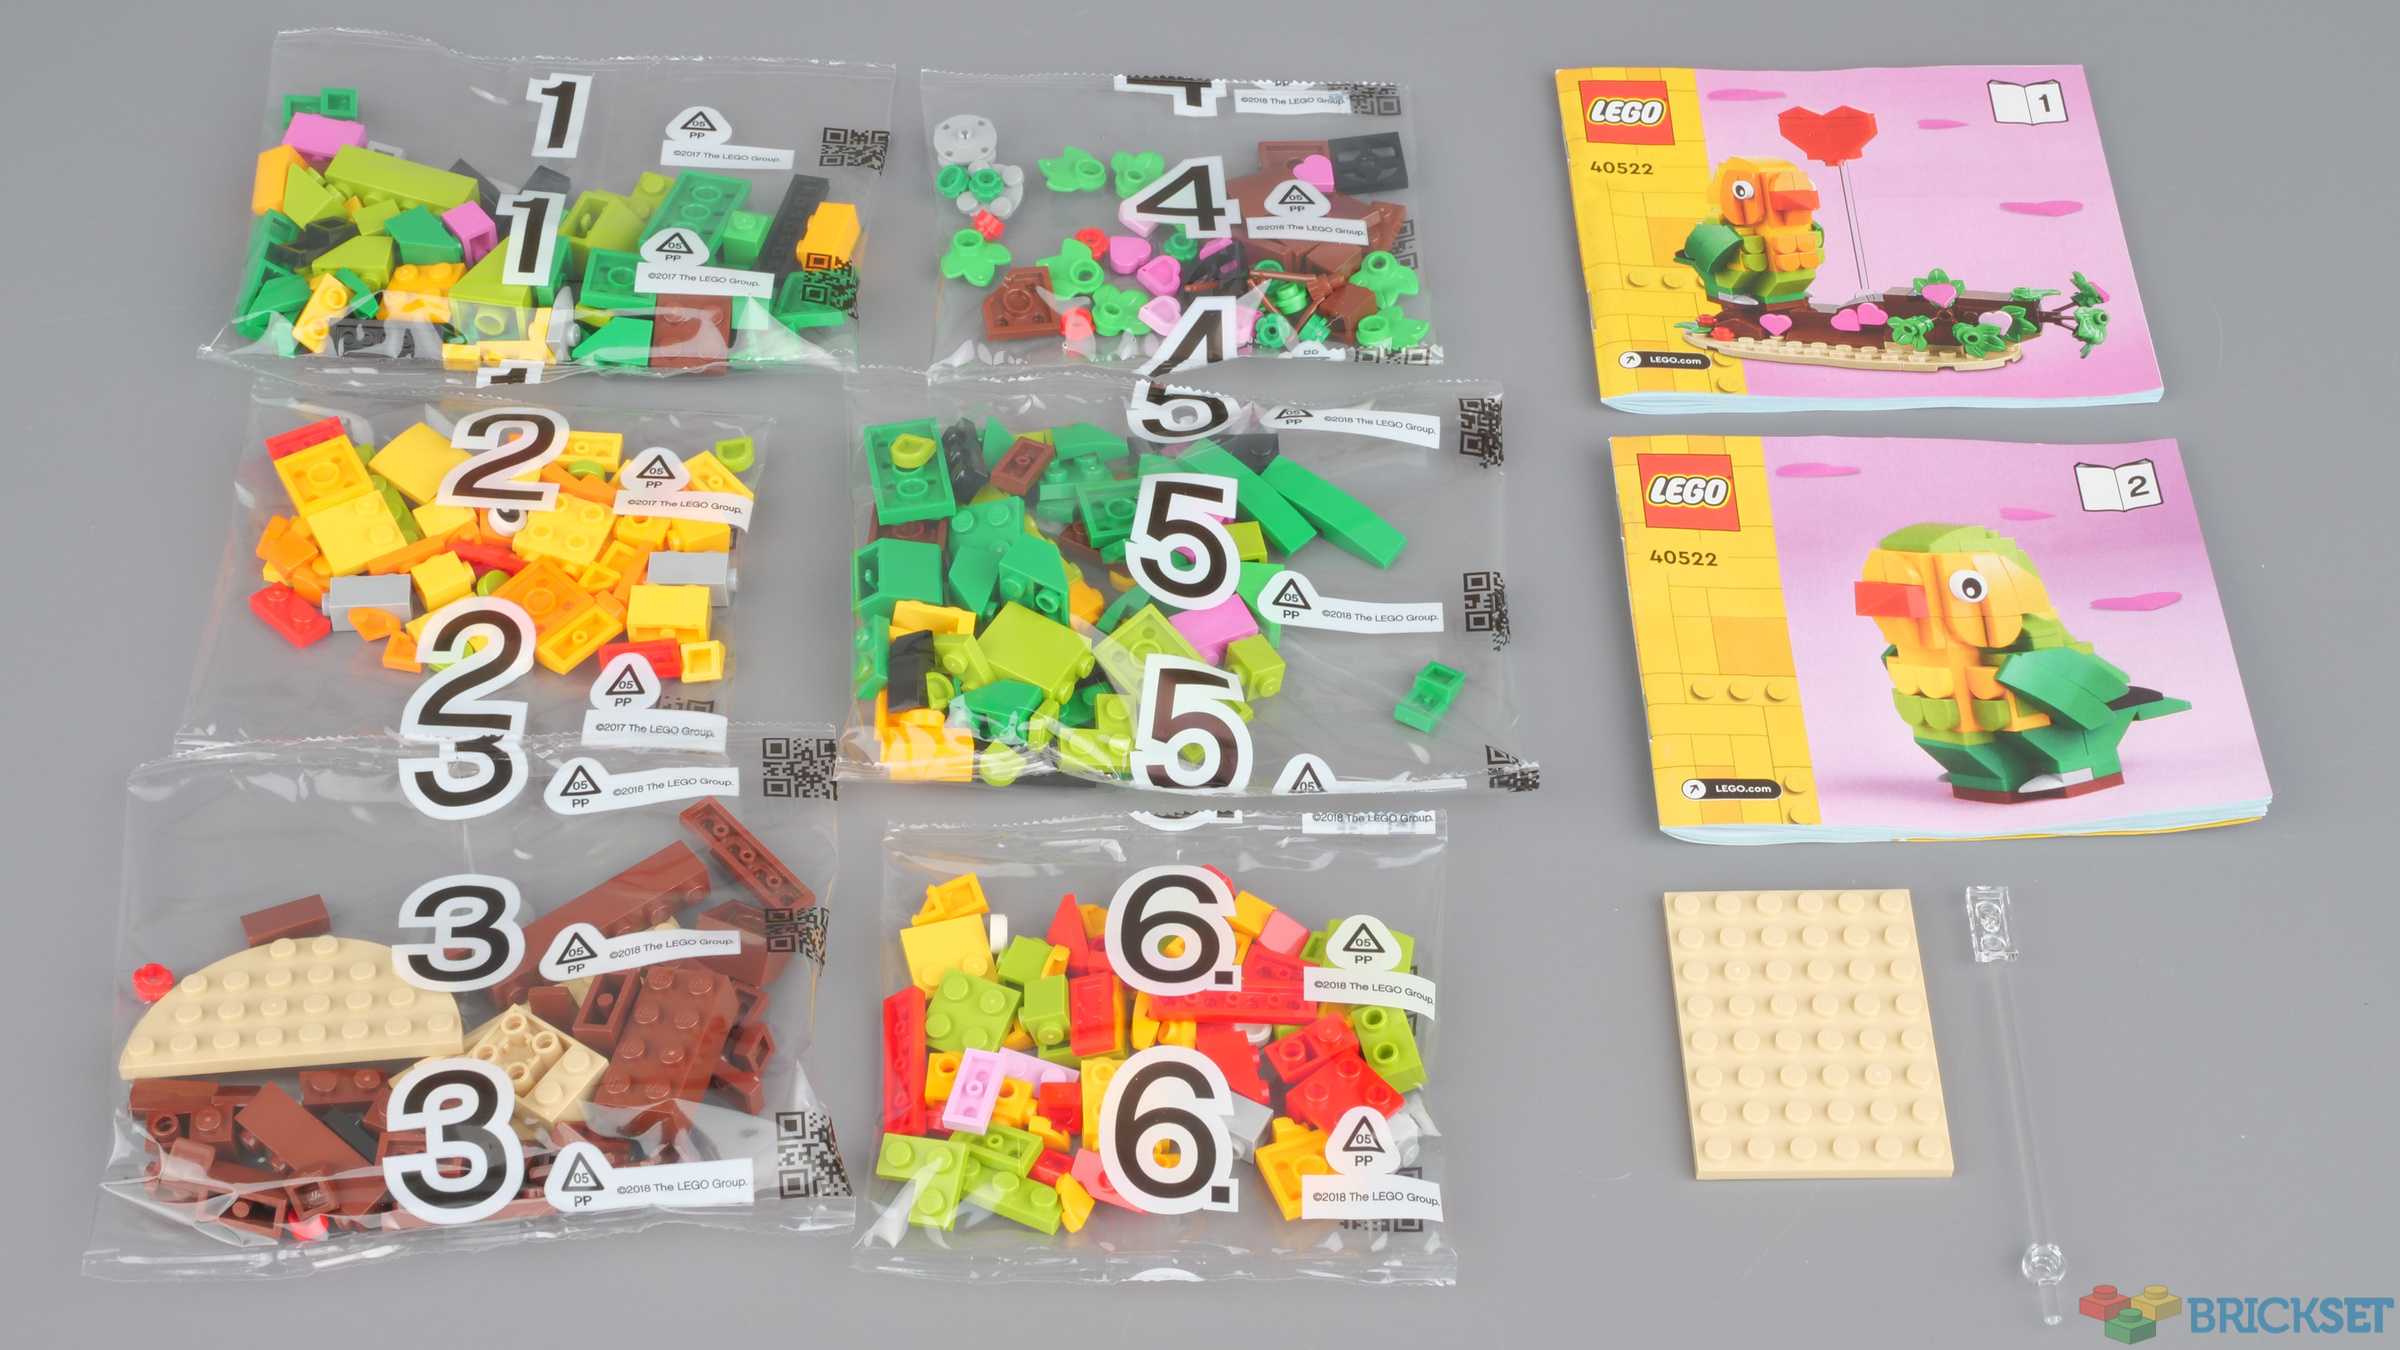 LEGO 40522 Valentine Lovebirds review